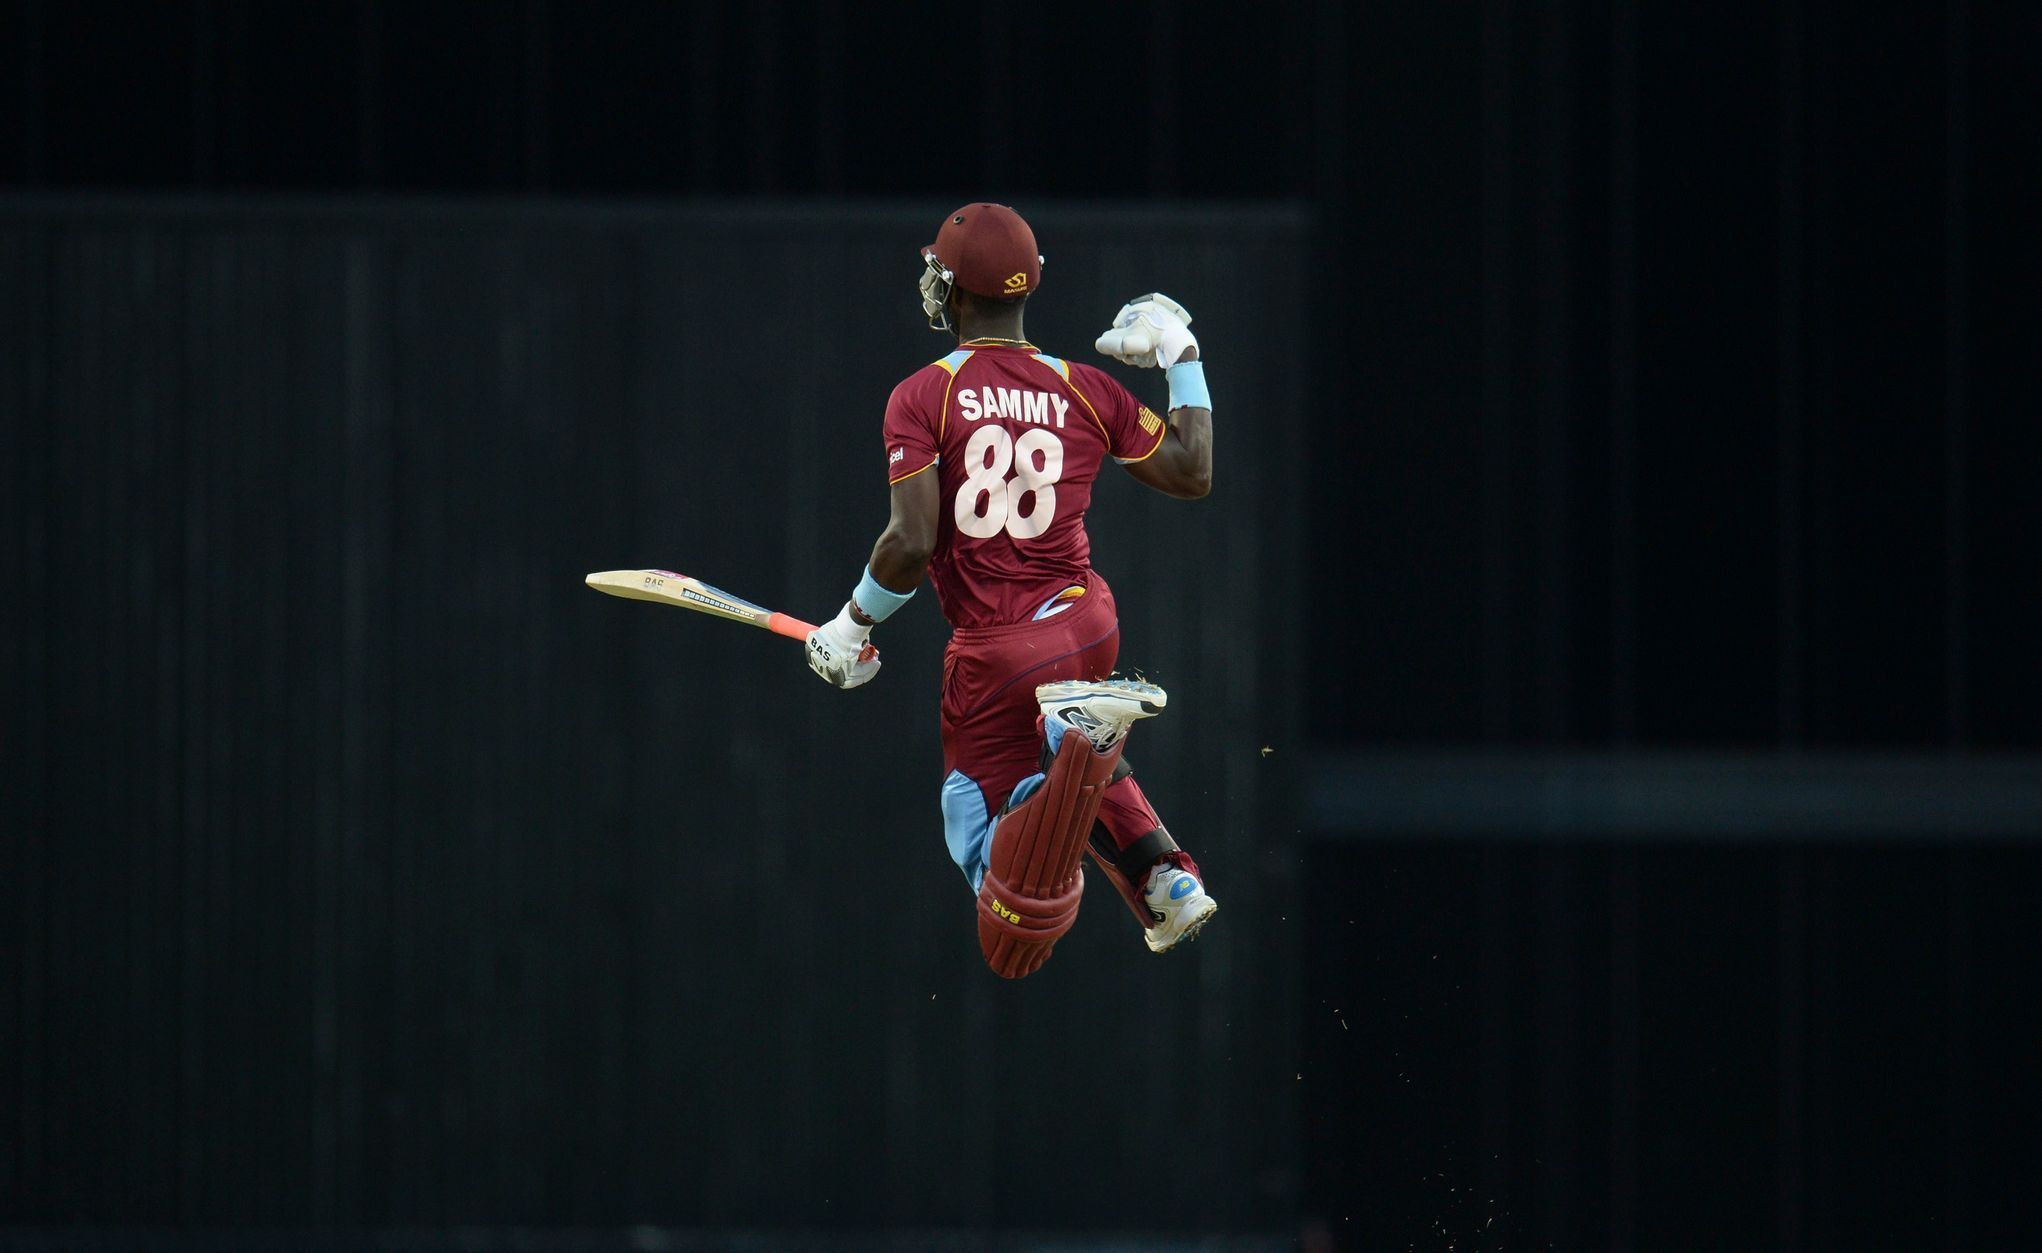 Nejlepší fotky roku 2014: Oslava v kriketu